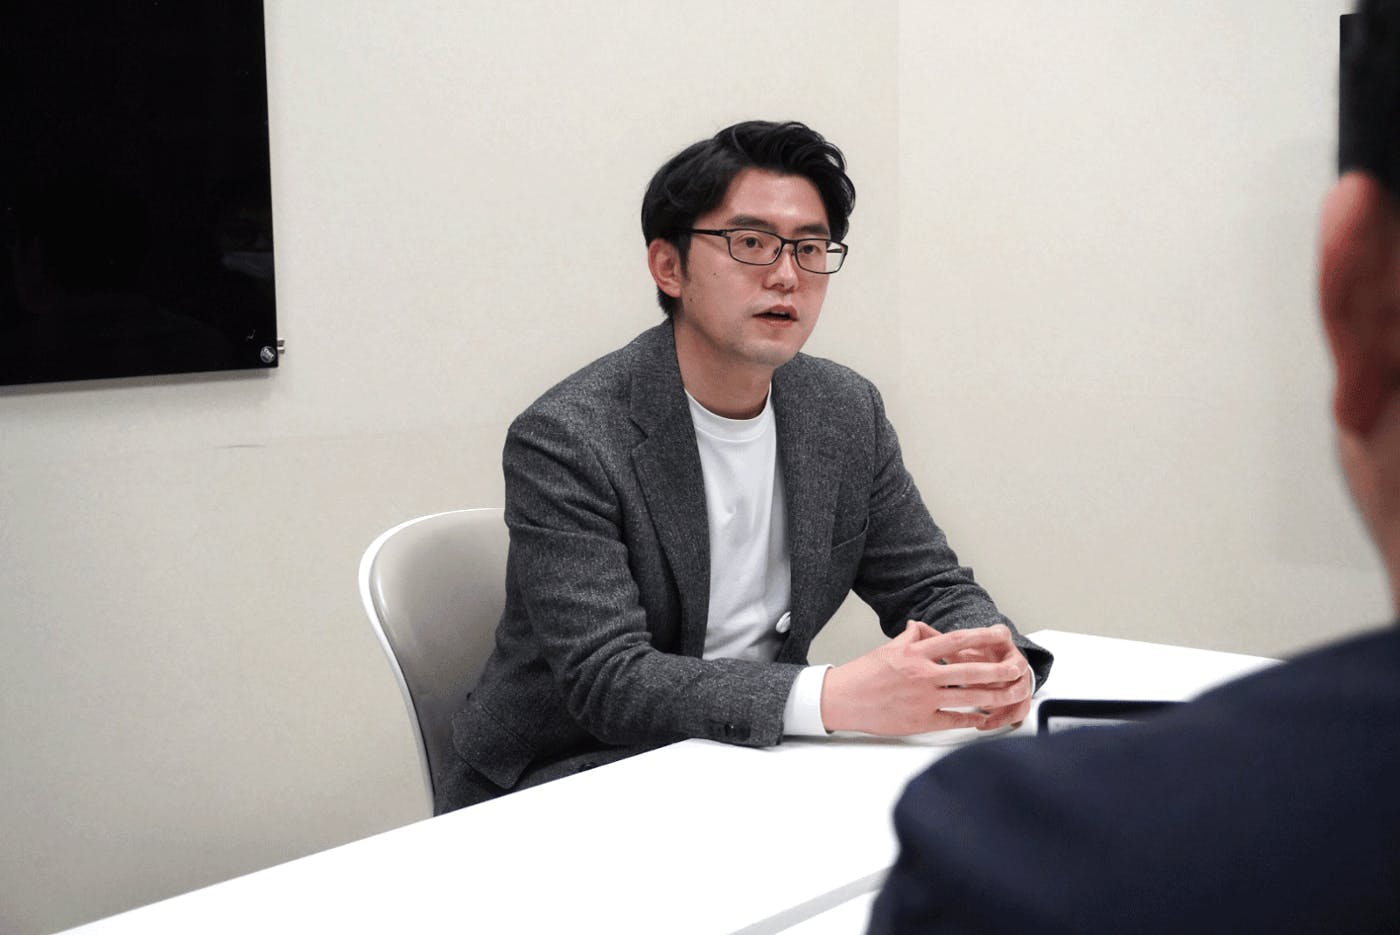 Yusuke Taguchi talks about his efforts on building UI/UX